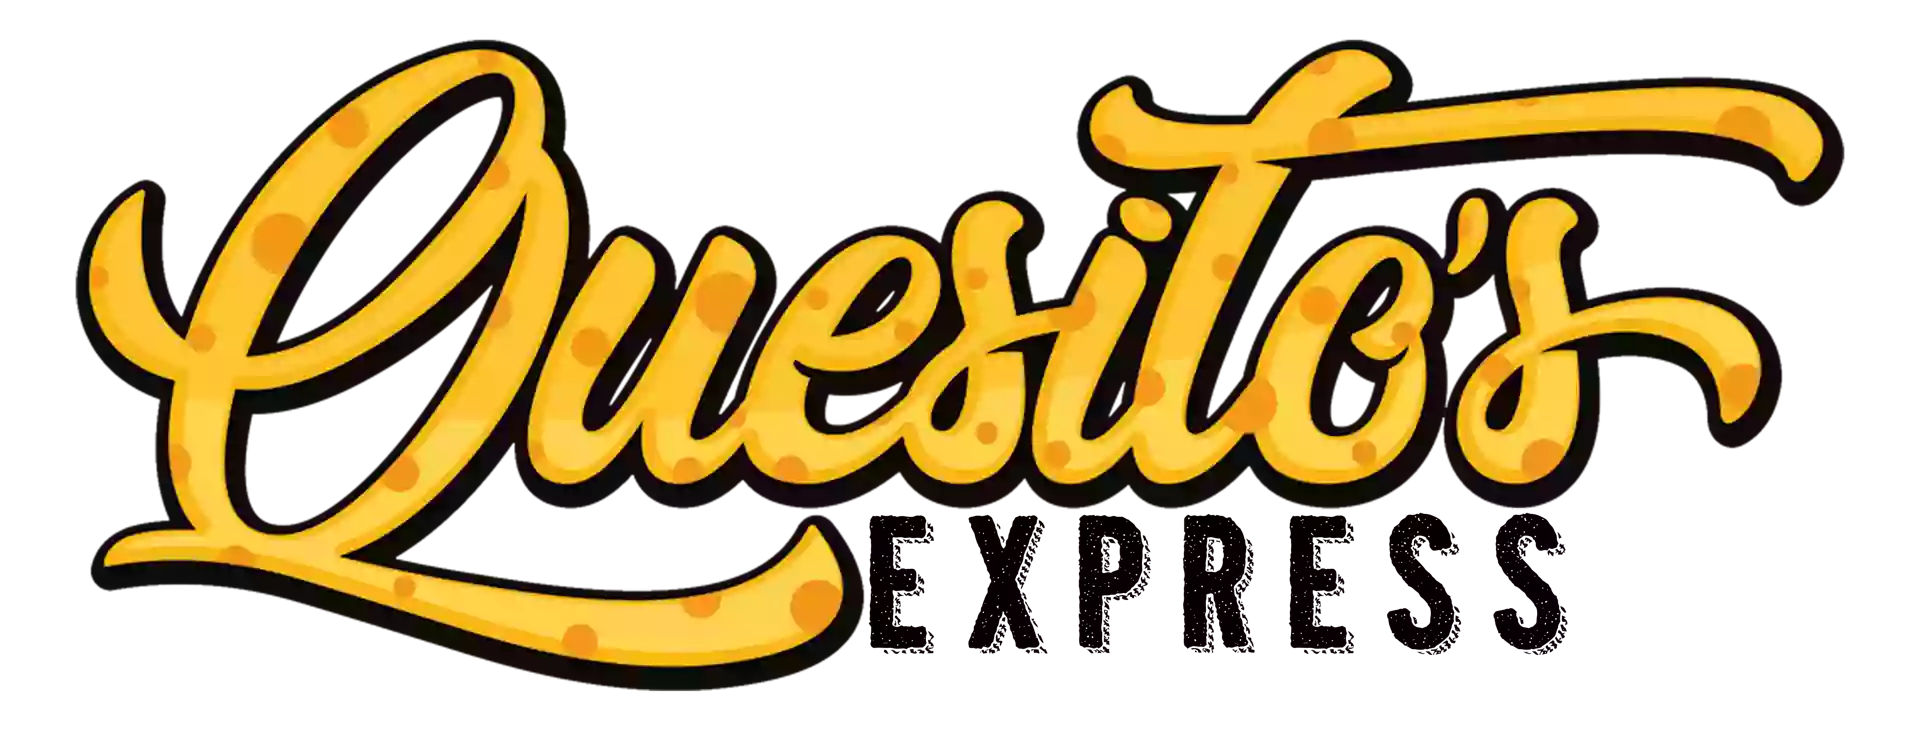 Quesito’s Express